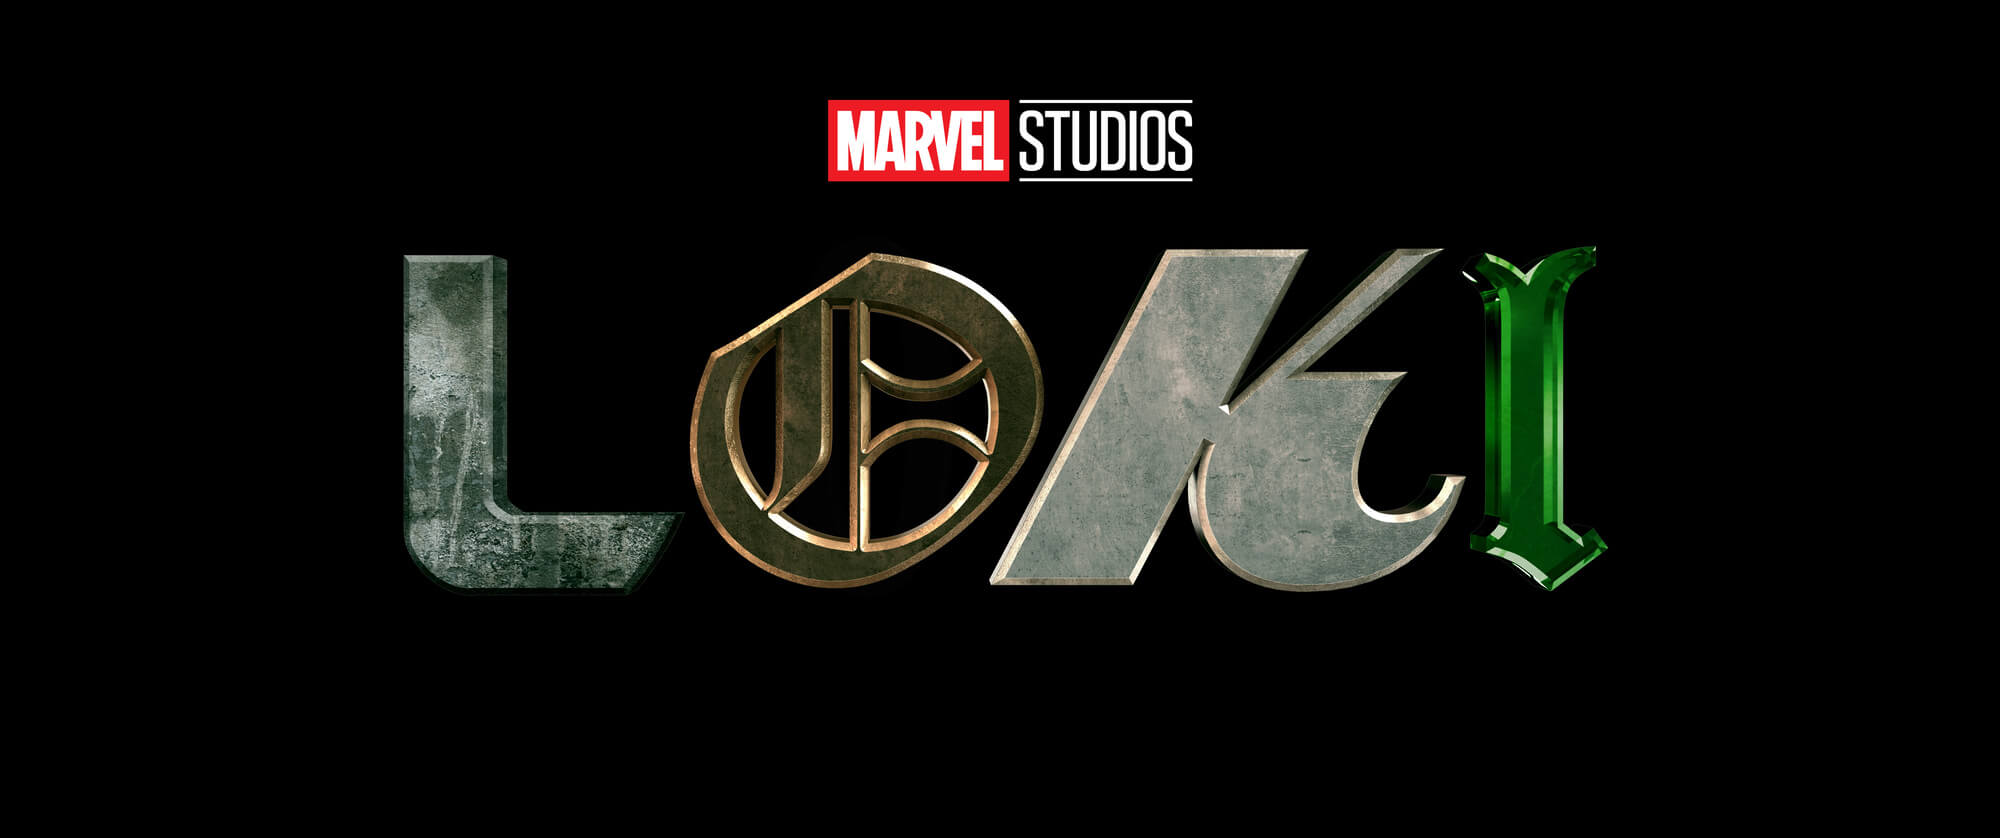 Marvel Studios’ ‘Loki’ To Debut June 9th On Disney+